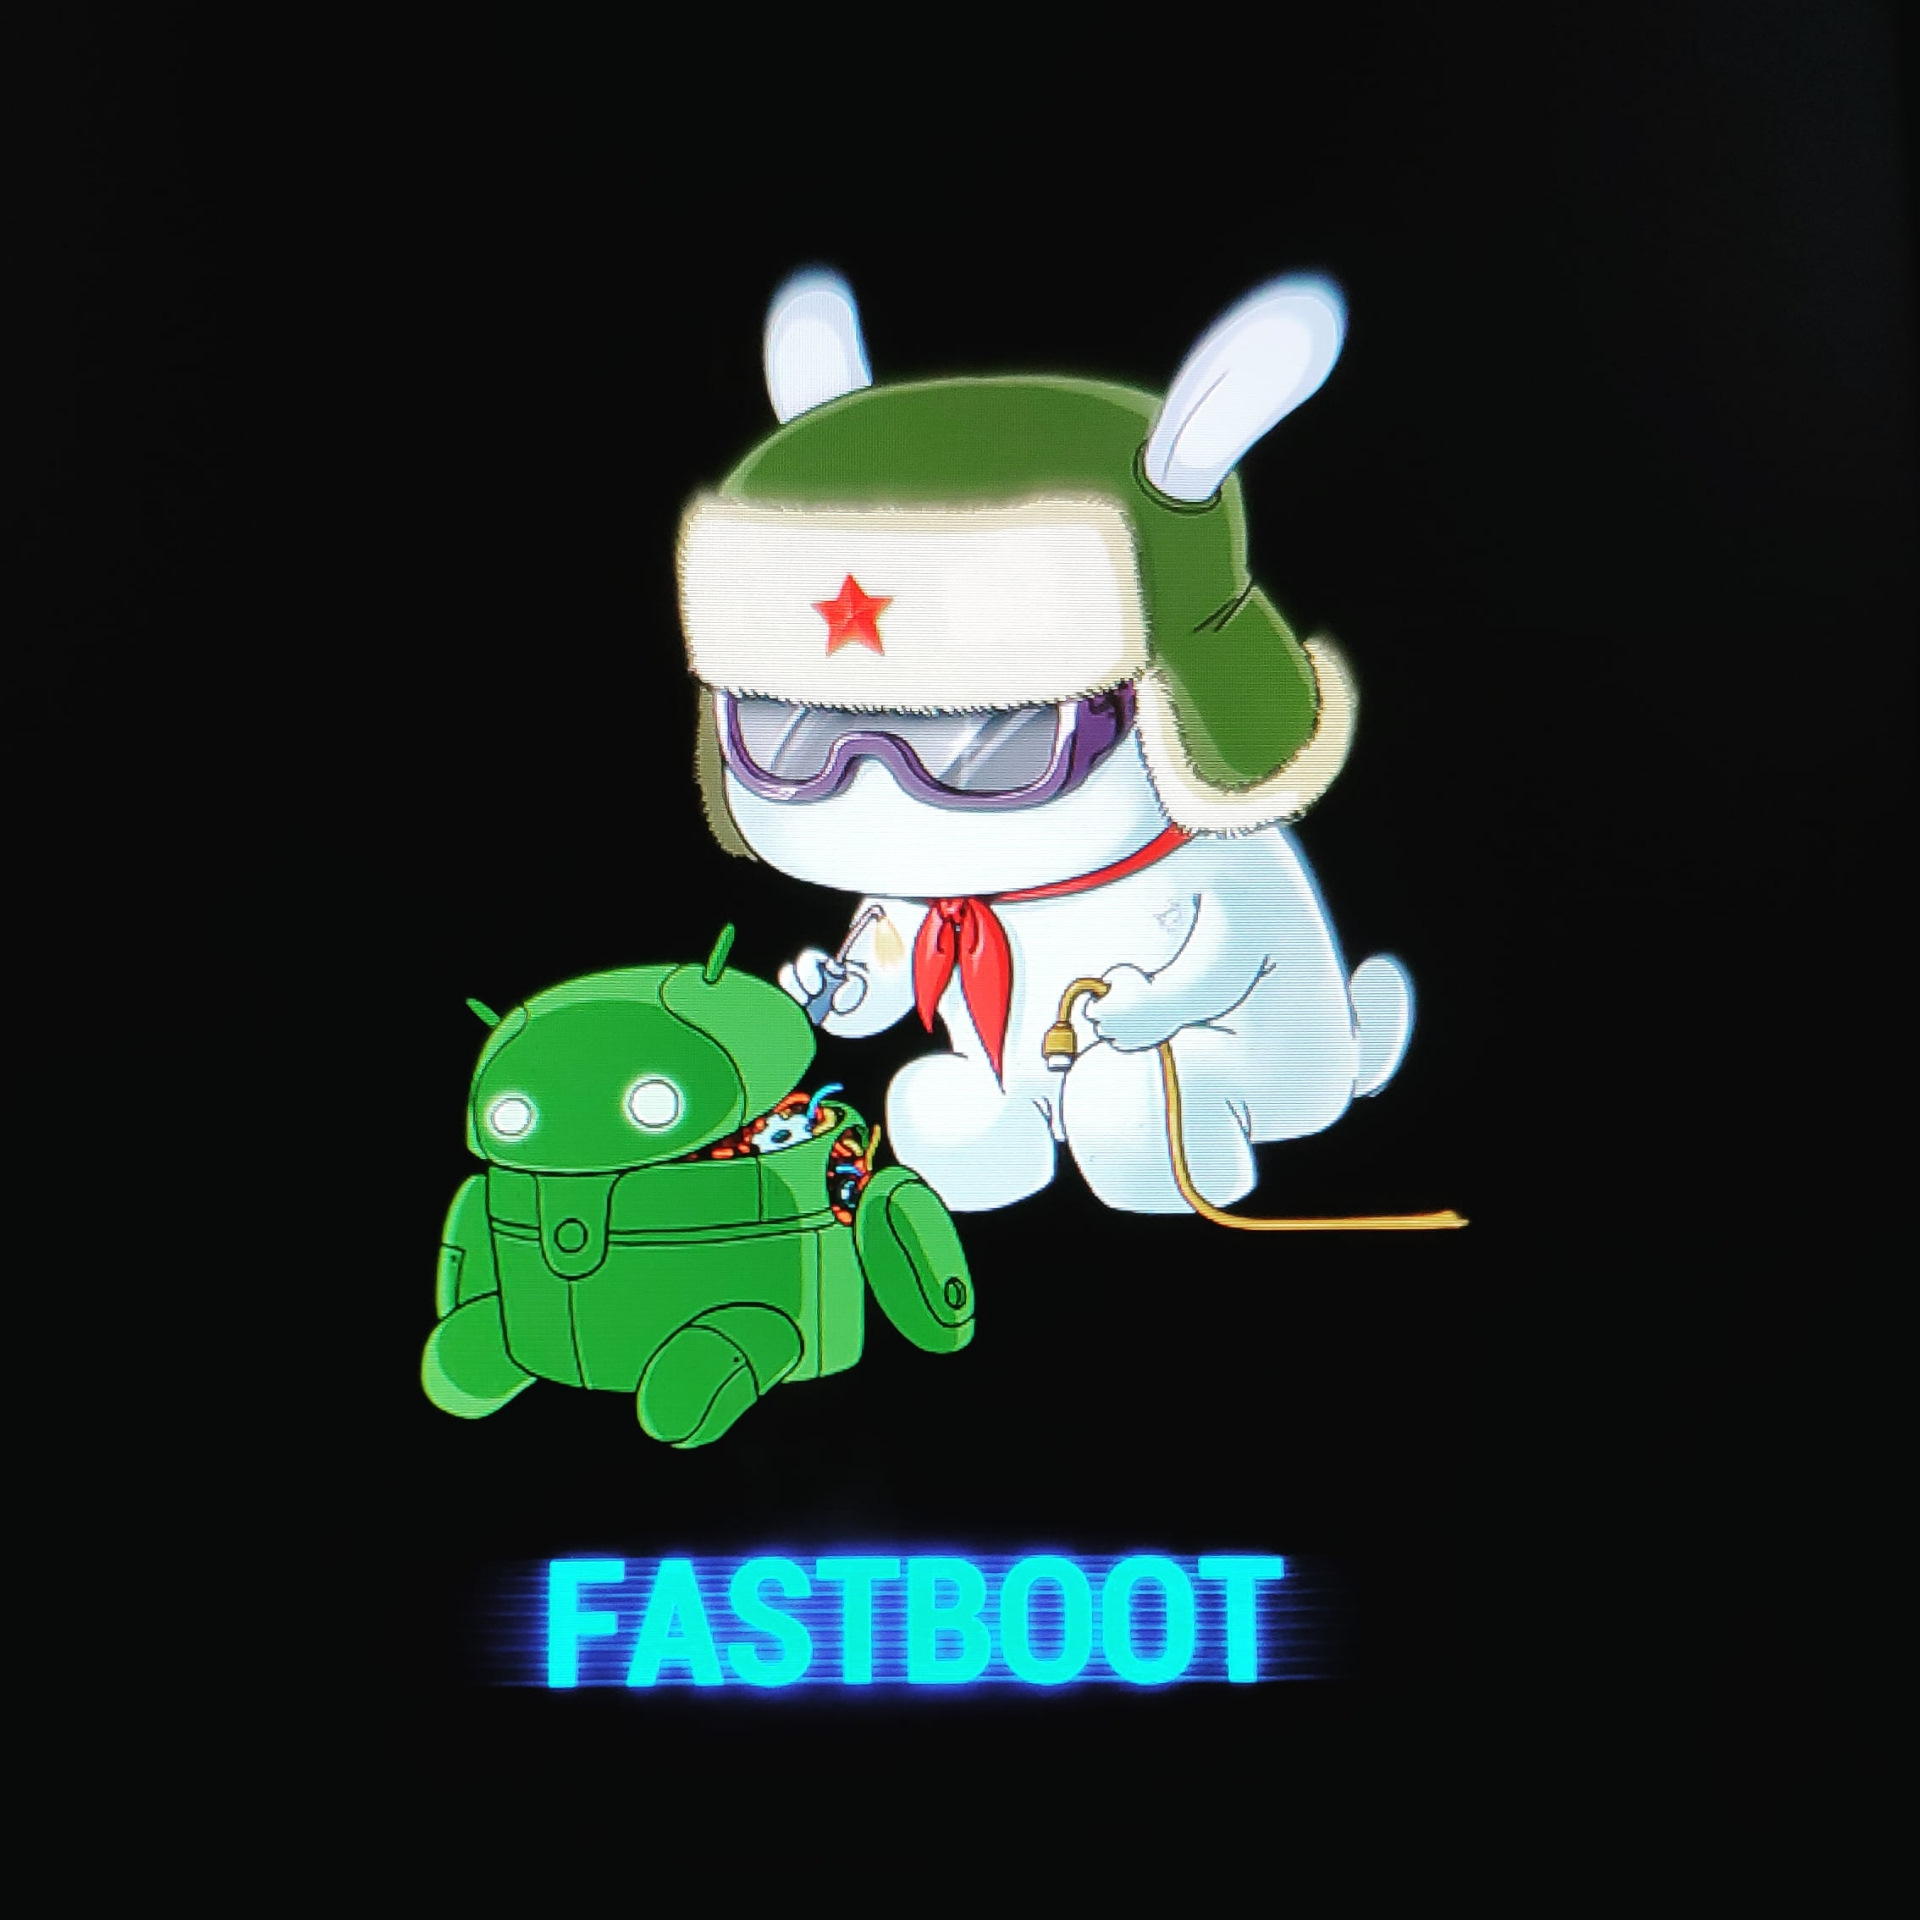 Fastboot redmi 8 pro. Кролик Xiaomi Fastboot. Заяц чинит андроид Xiaomi. Xiaomi Fastboot Screen. Заяц андроид Fastboot.